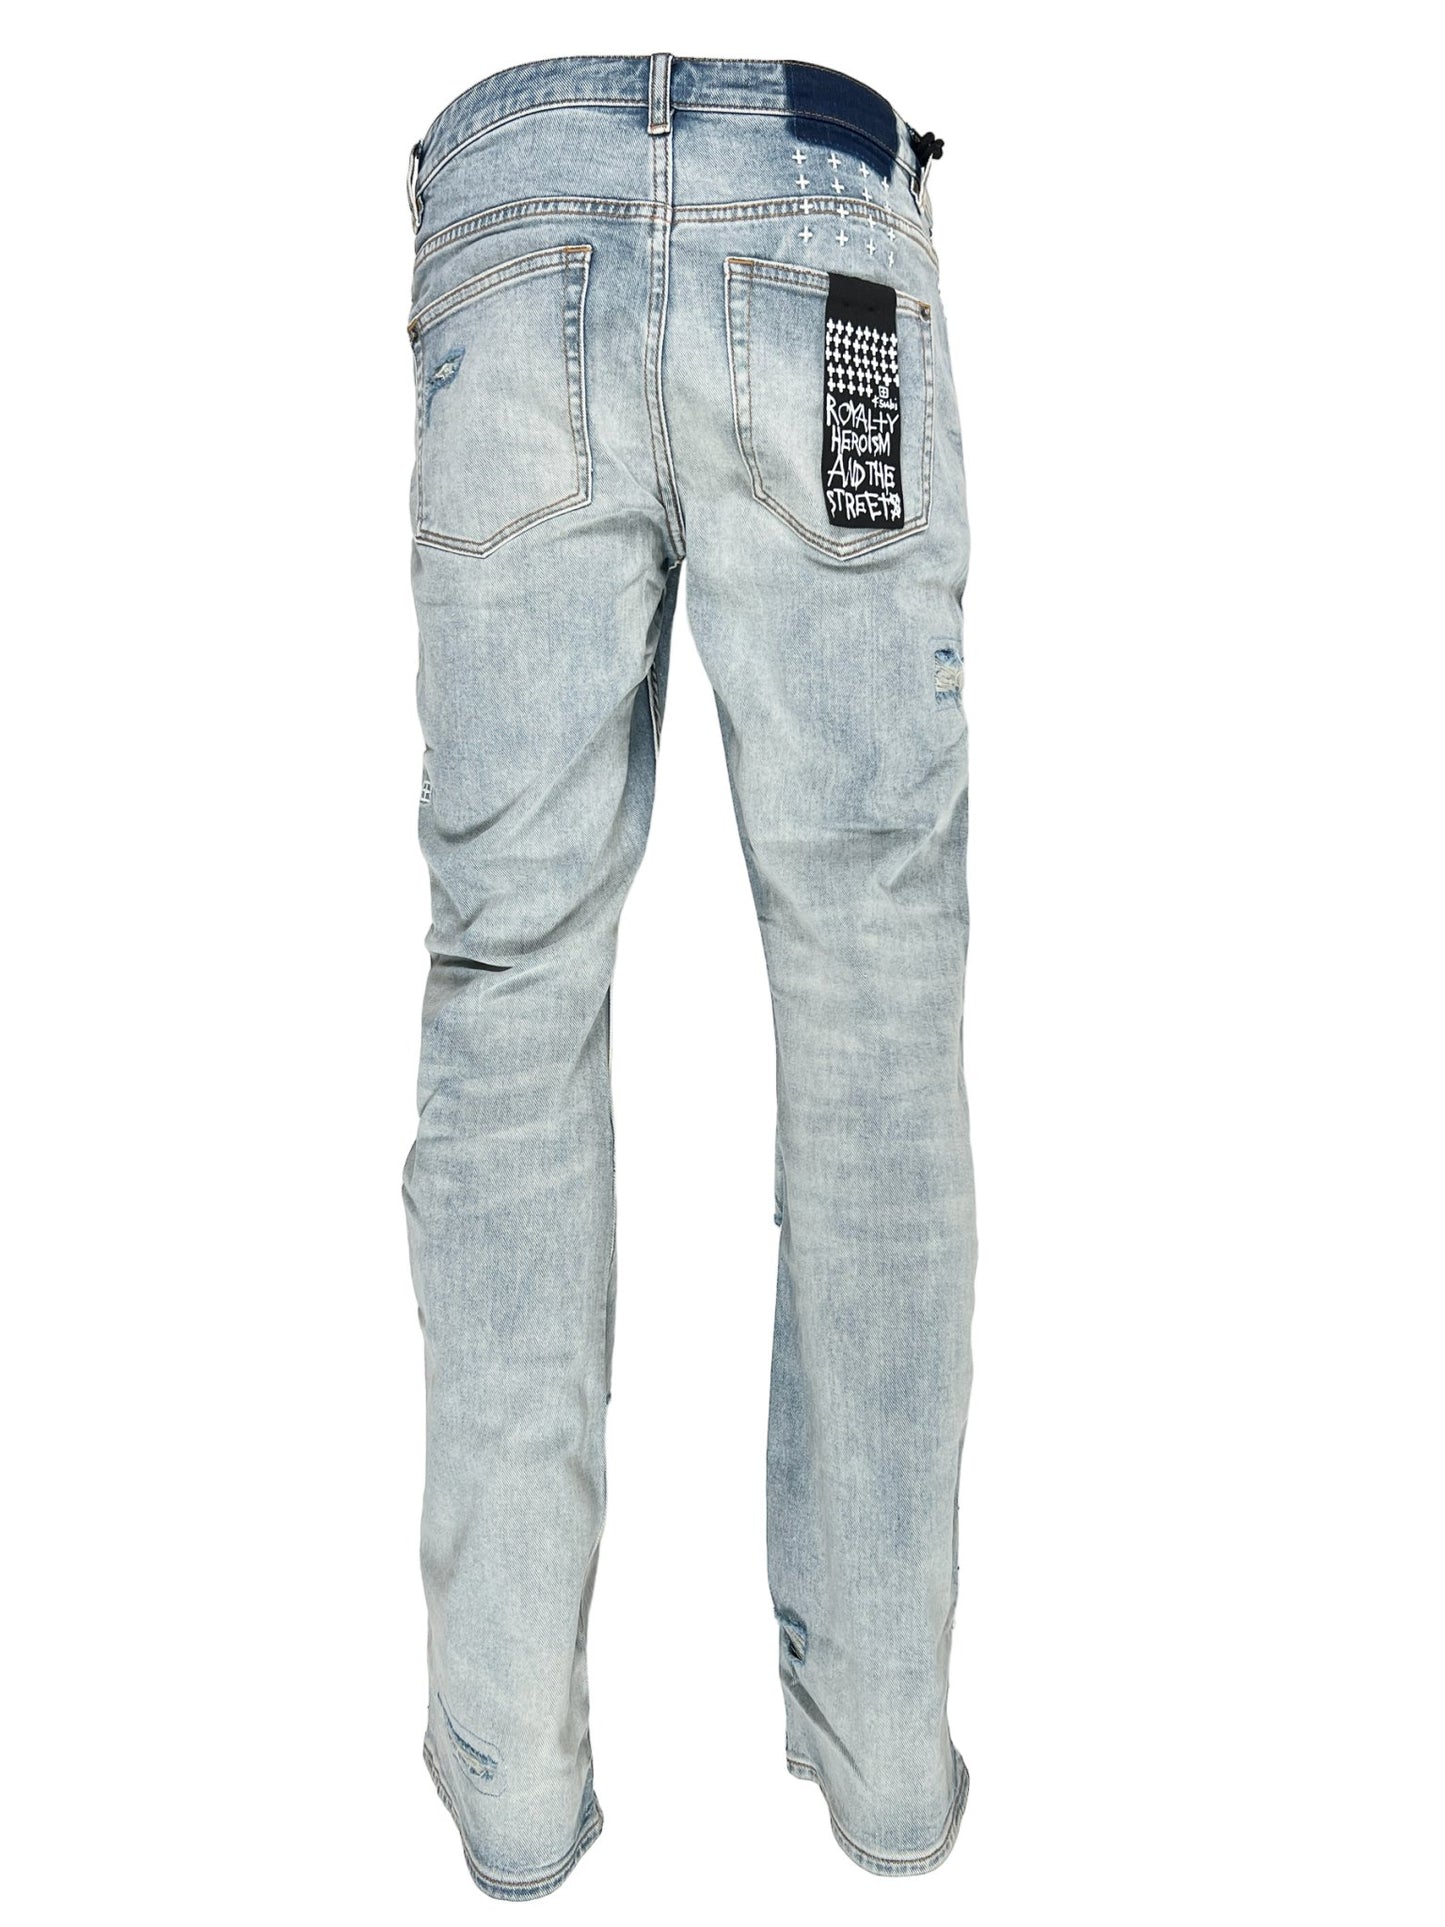 Pair of KSUBI BRONKO DYANAMITE METAL DENIM jeans photographed from the back.